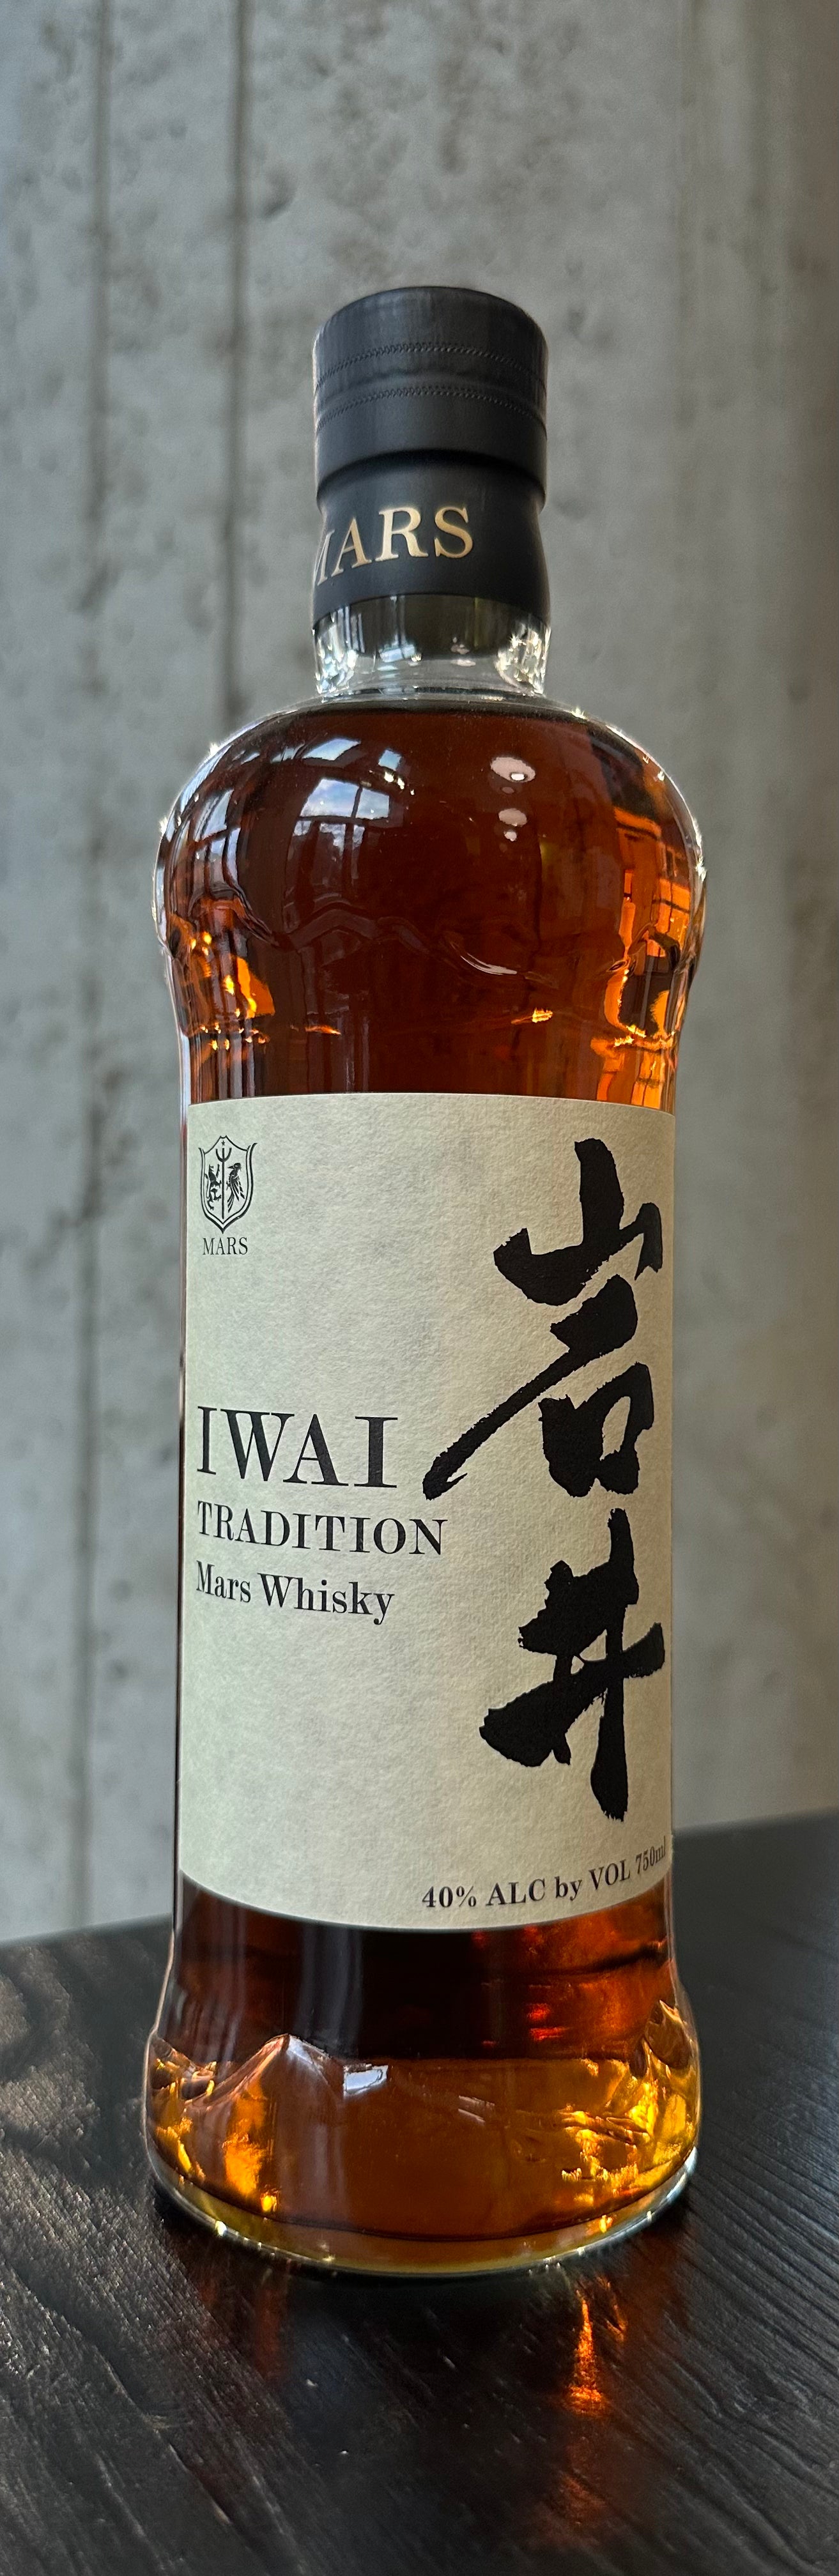 Mars Whisky "Iwai" Tradition Whisky